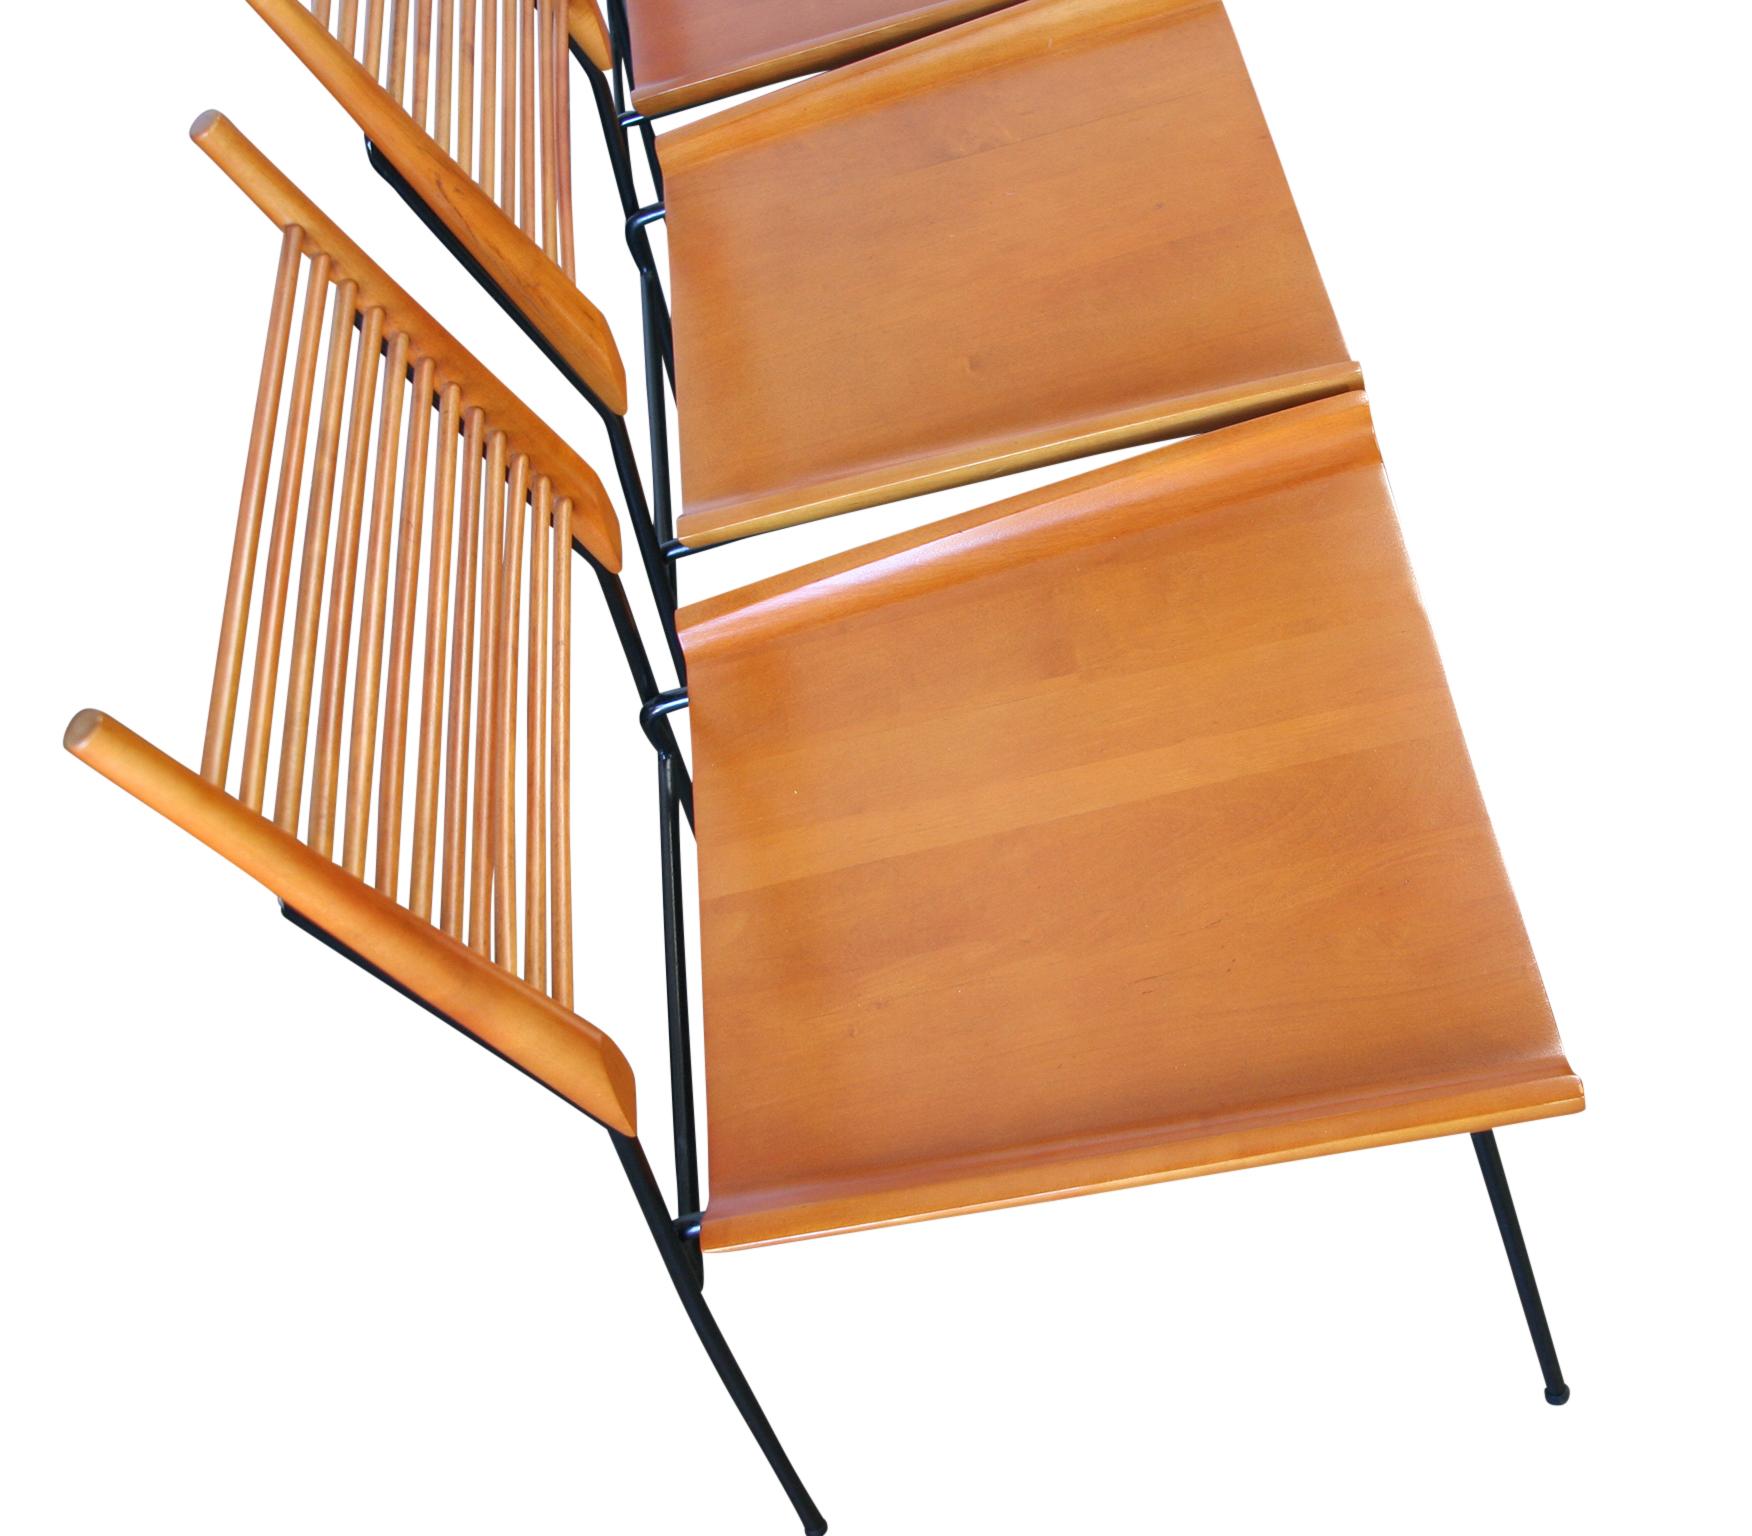 Steel Paul McCobb Planner Group Shovel Chairs #1533 Maple Iron Set of 4